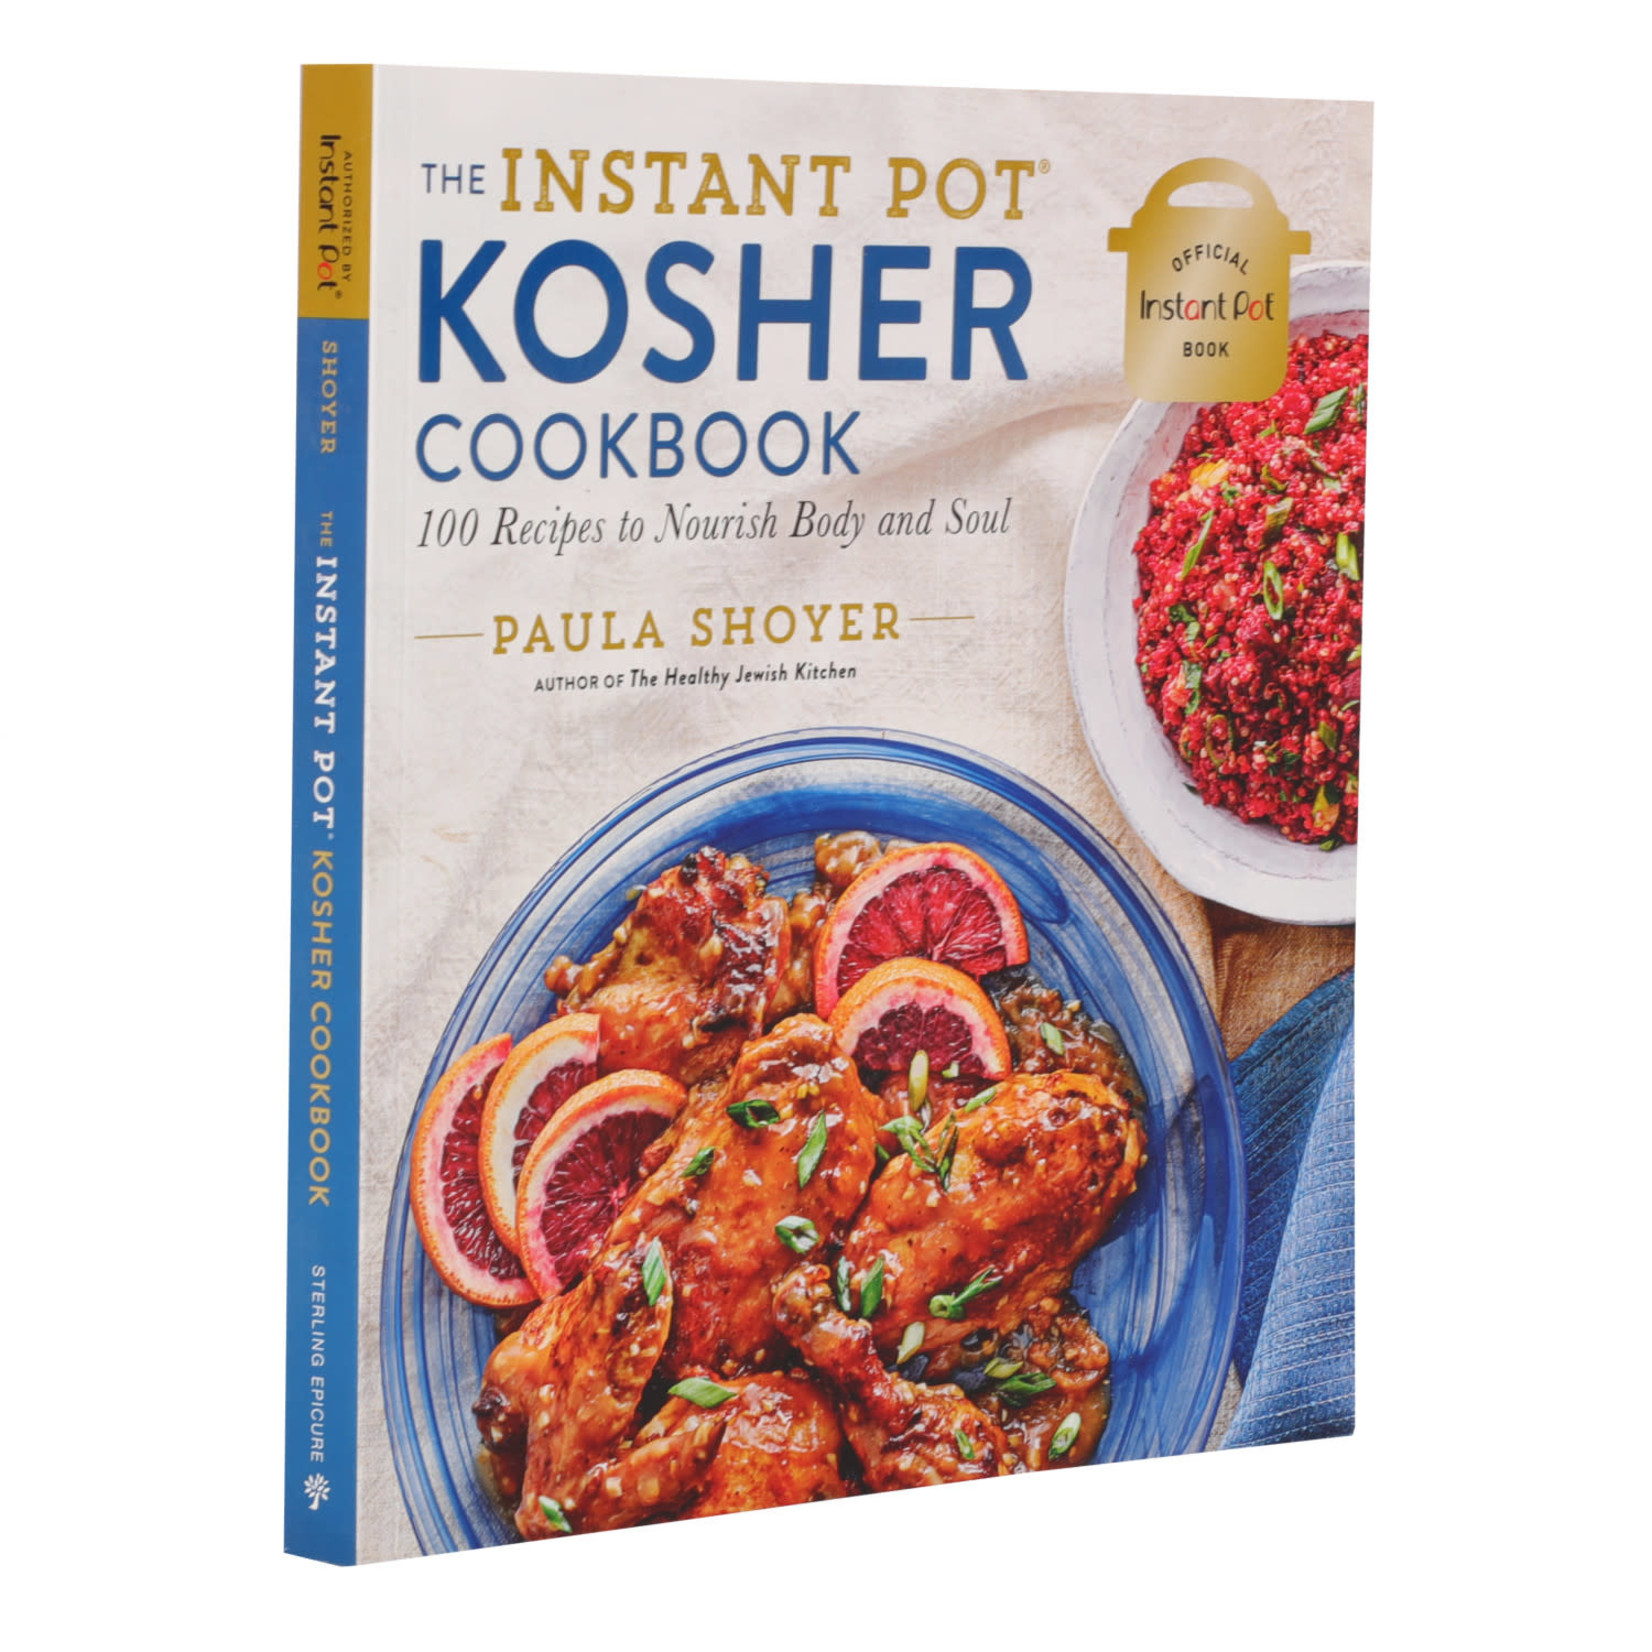 The Instant Pot Kosher Cookbook